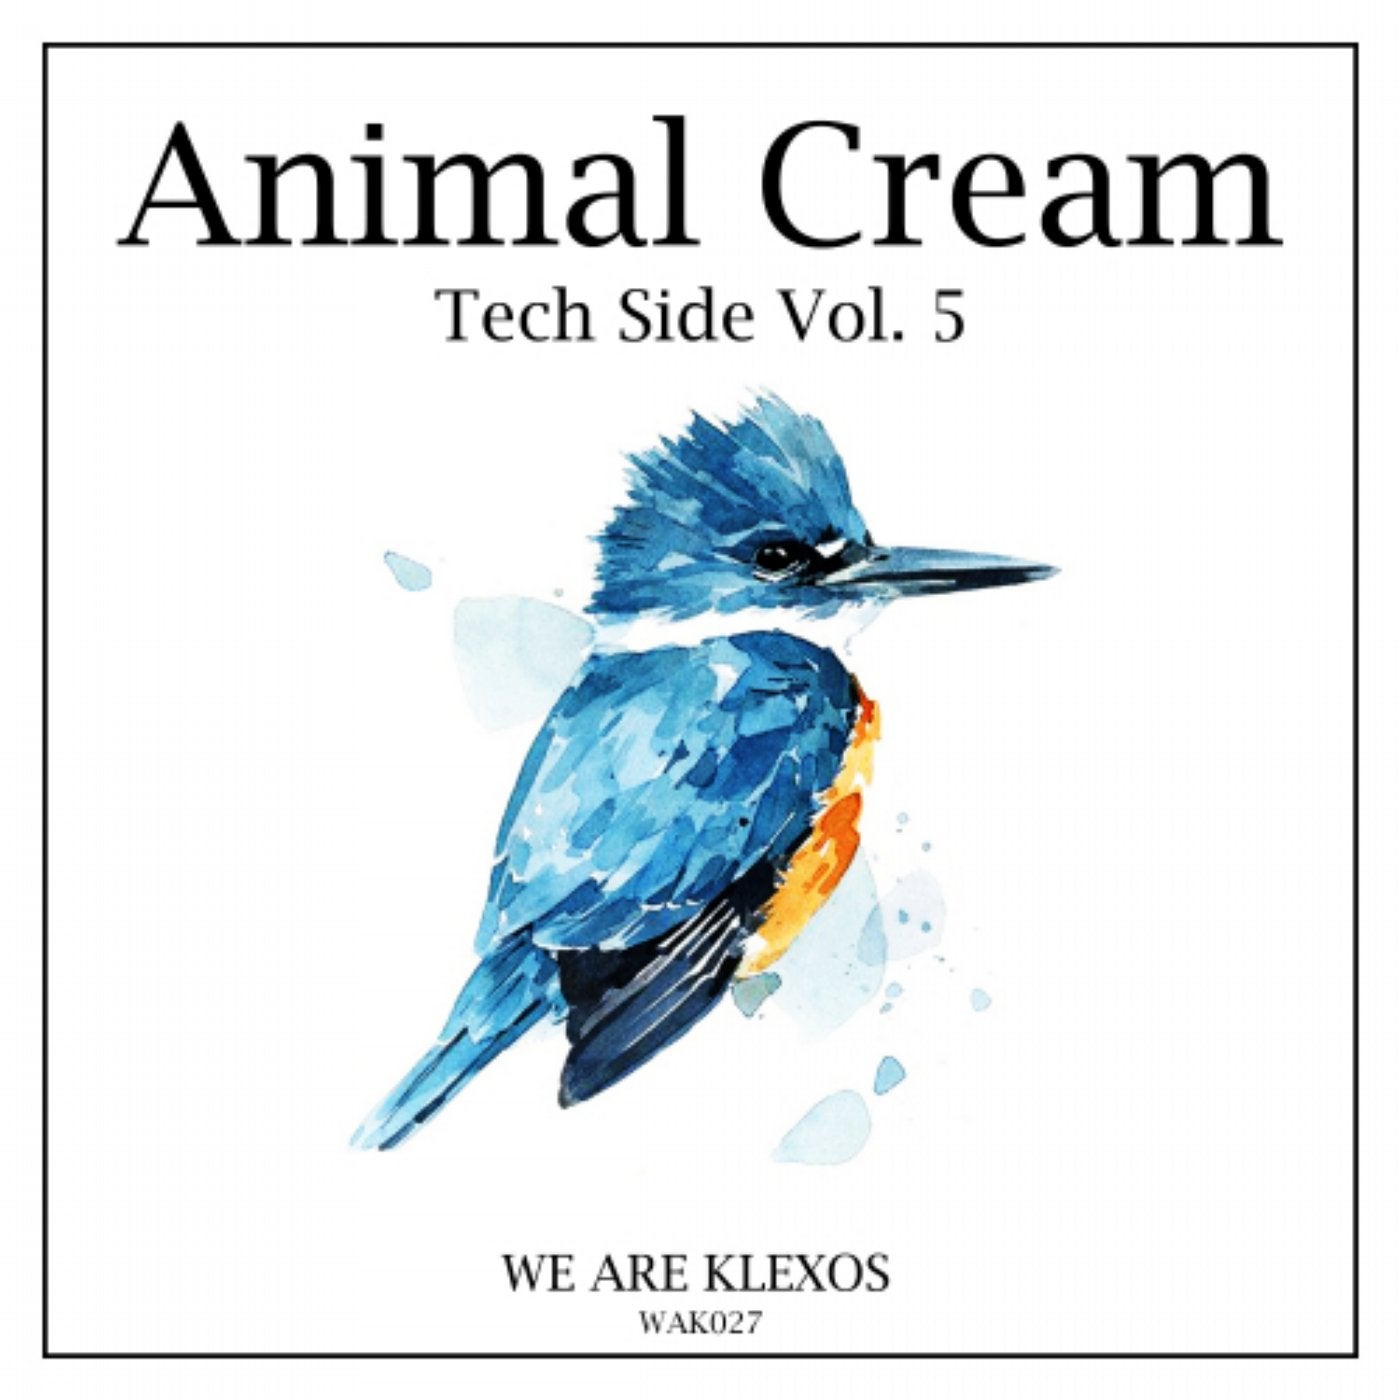 Animal Cream Tech Side, Vol. 5